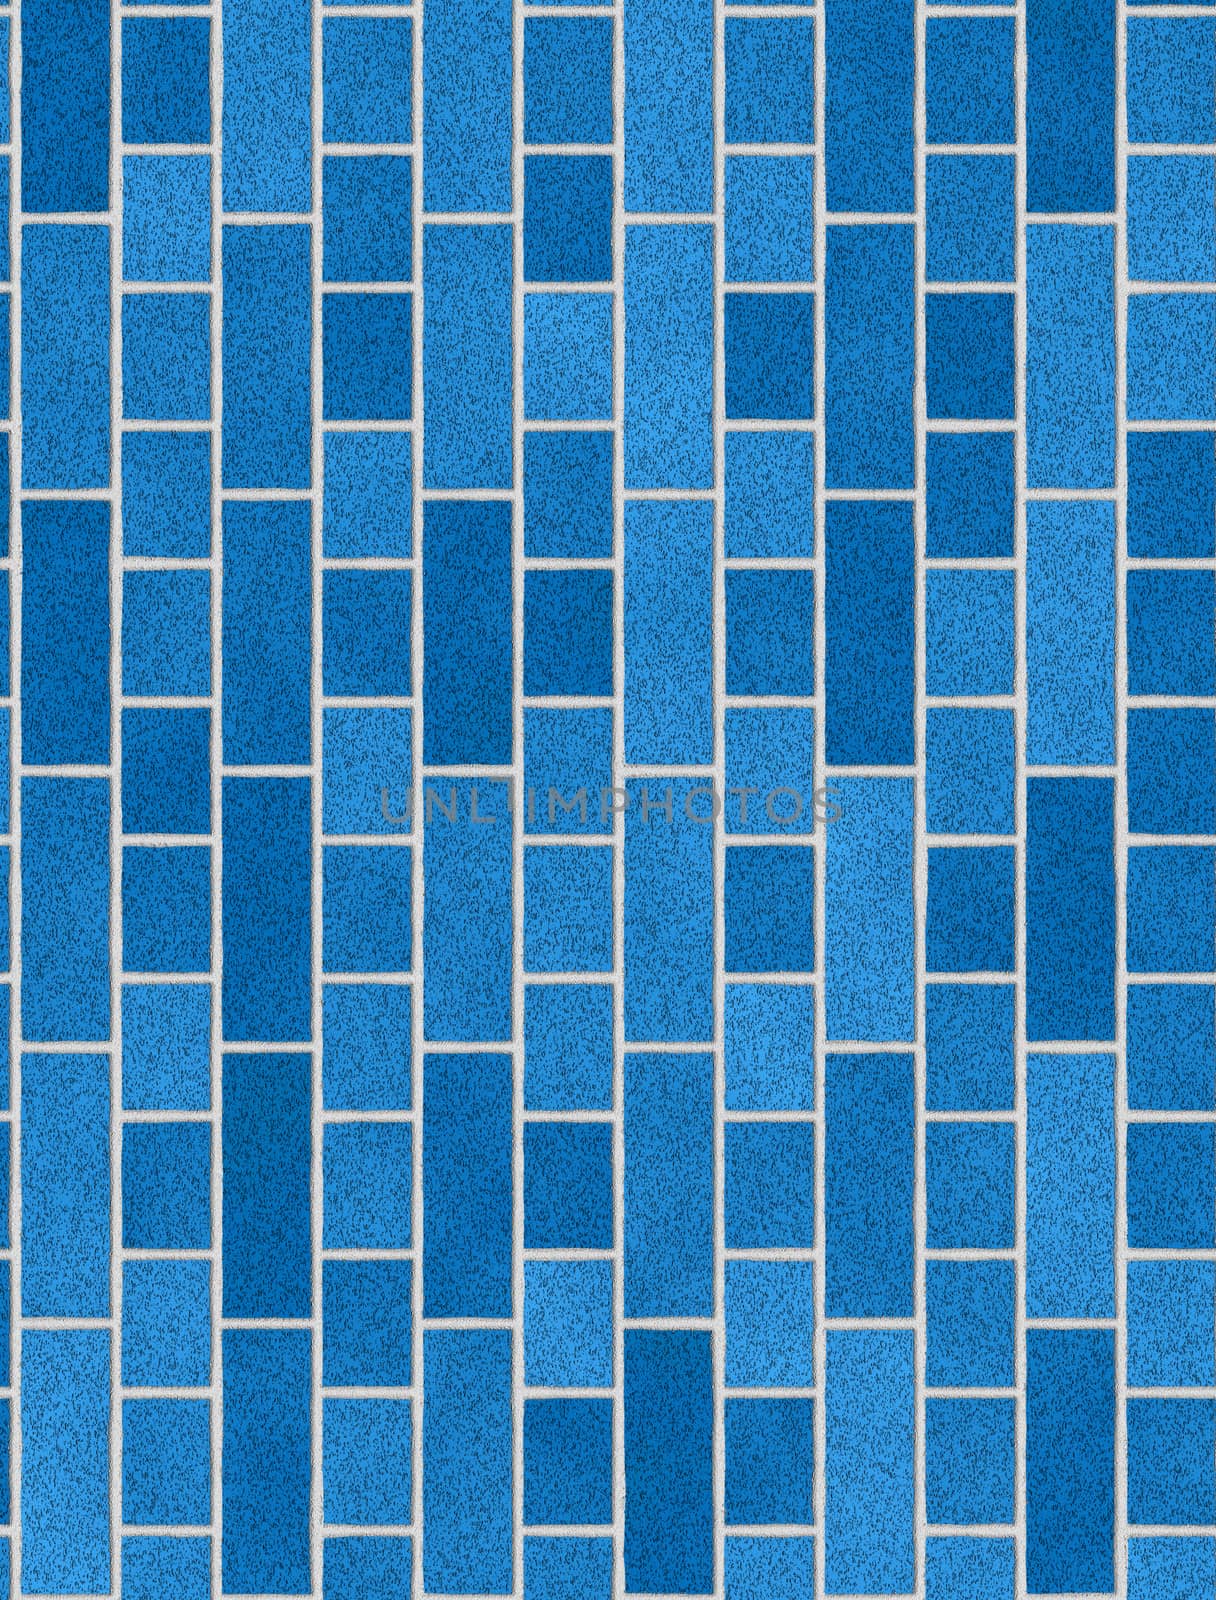 Blue brick wall by sfinks